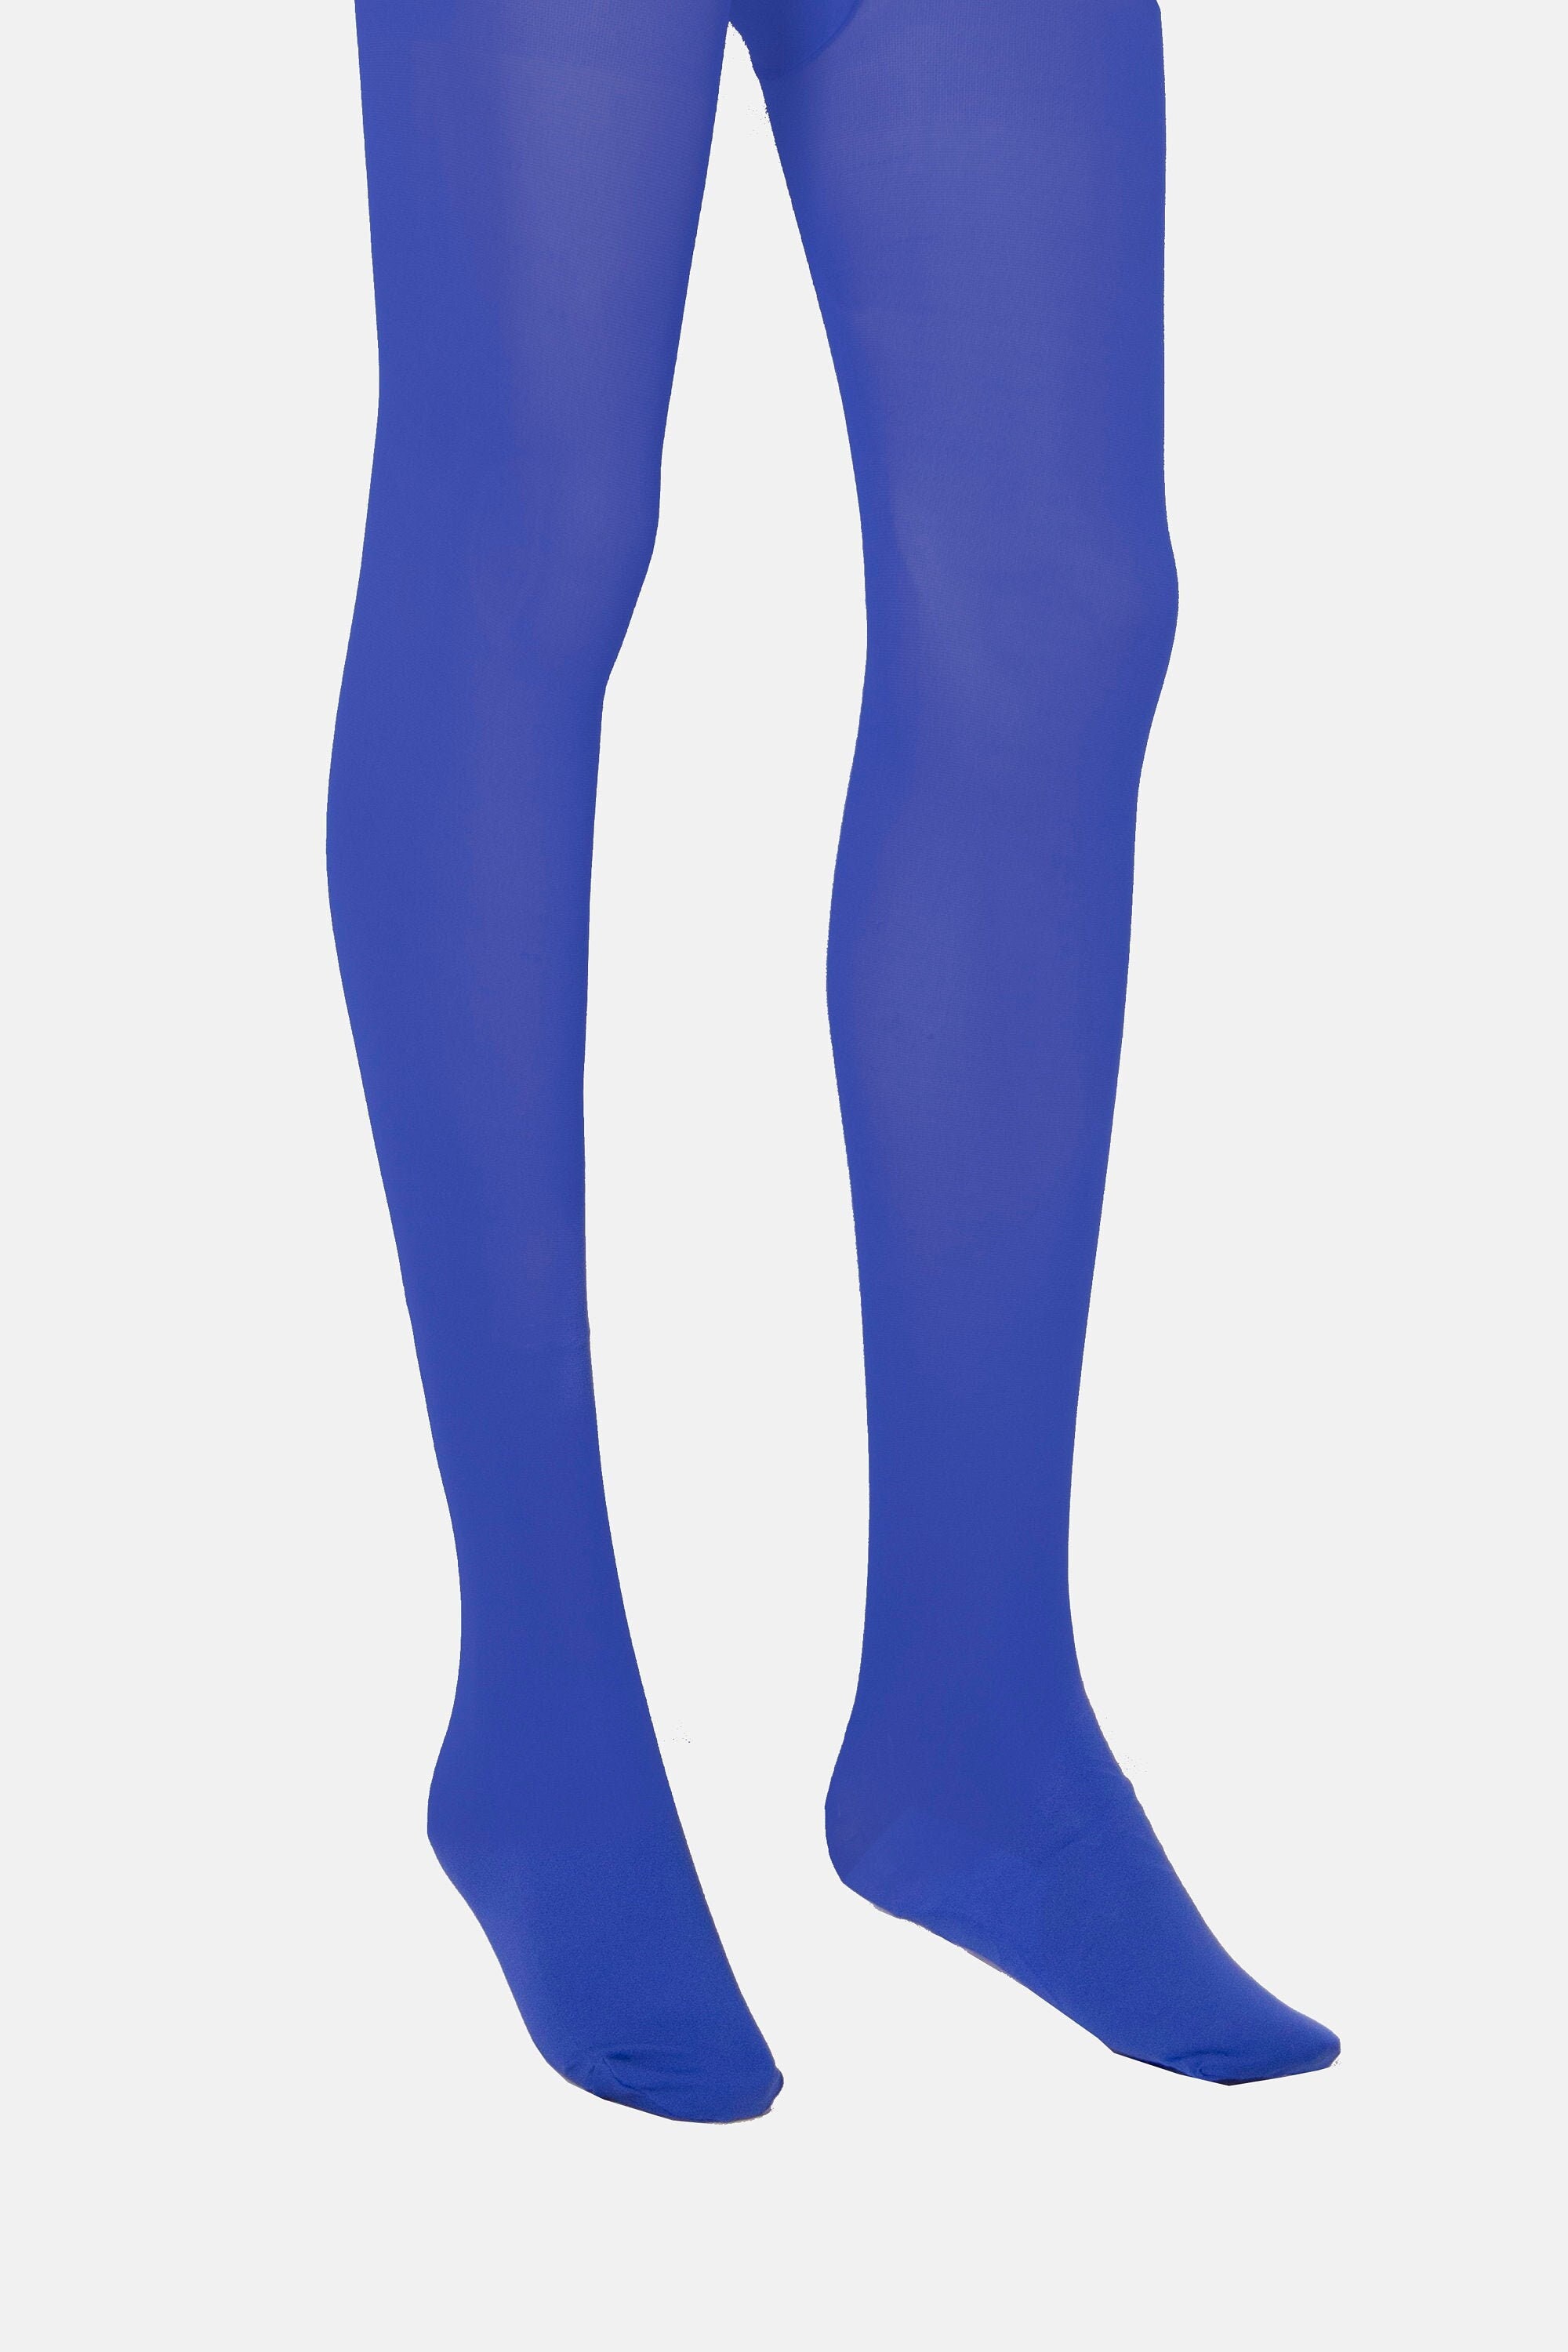 Cobalt Blue Pantyhose, Blue Tights, Cyan Blue Nylon Stockings, Womens Blue  Capri Retro 60s Pantyhose, Stewardess Nylon Stockings 